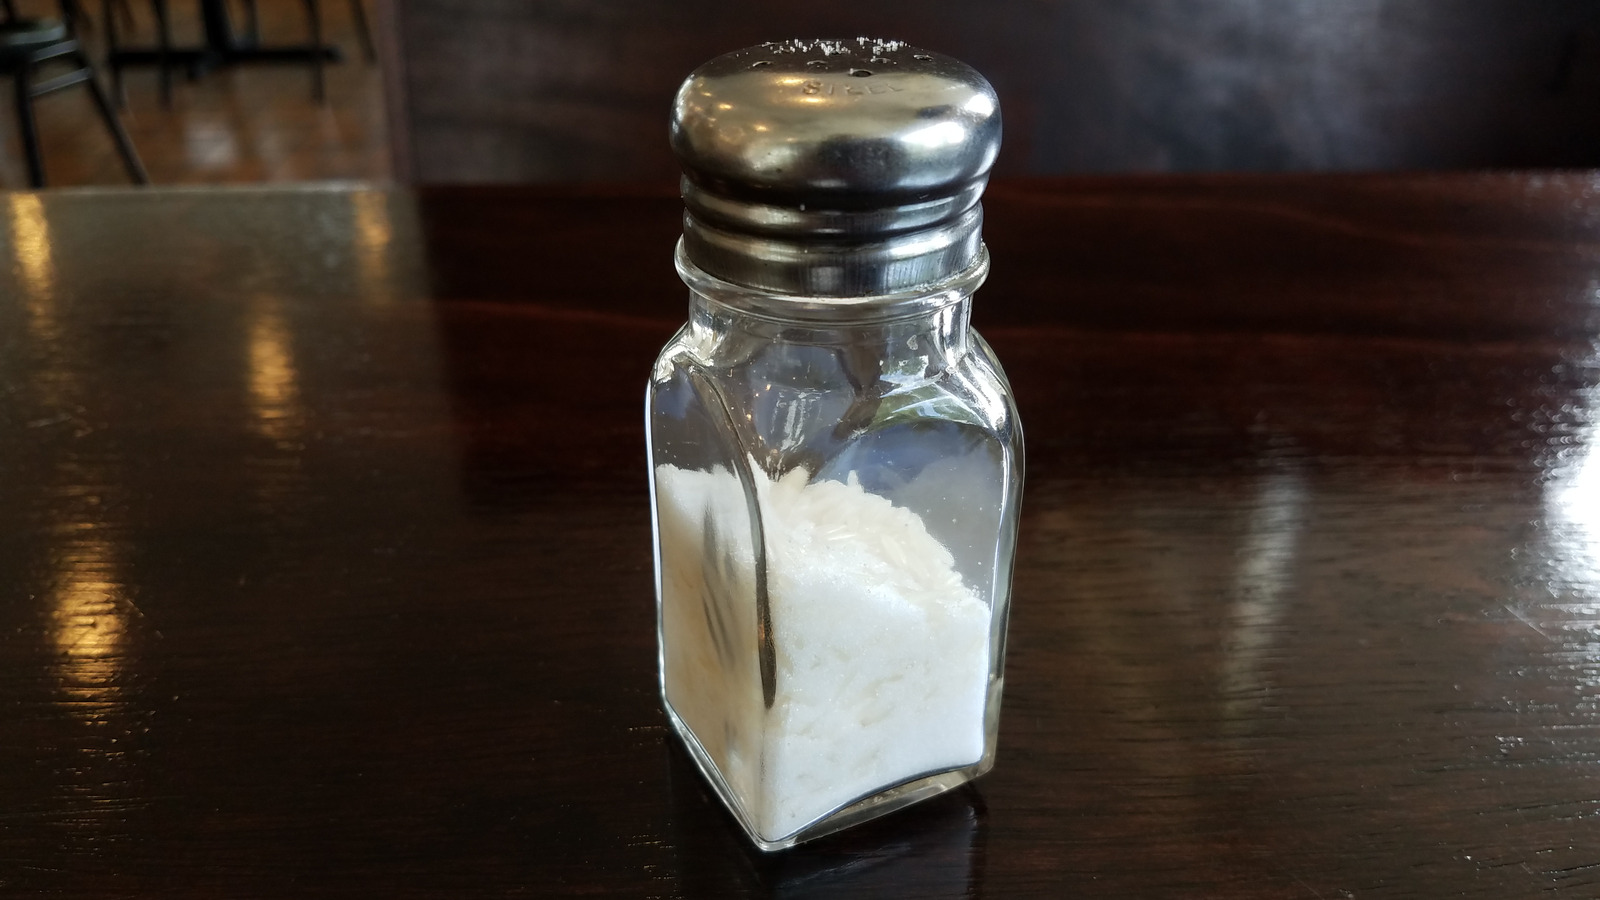 https://www.tastingtable.com/img/gallery/the-reason-restaurants-put-rice-in-salt-shakers/l-intro-1645378465.jpg